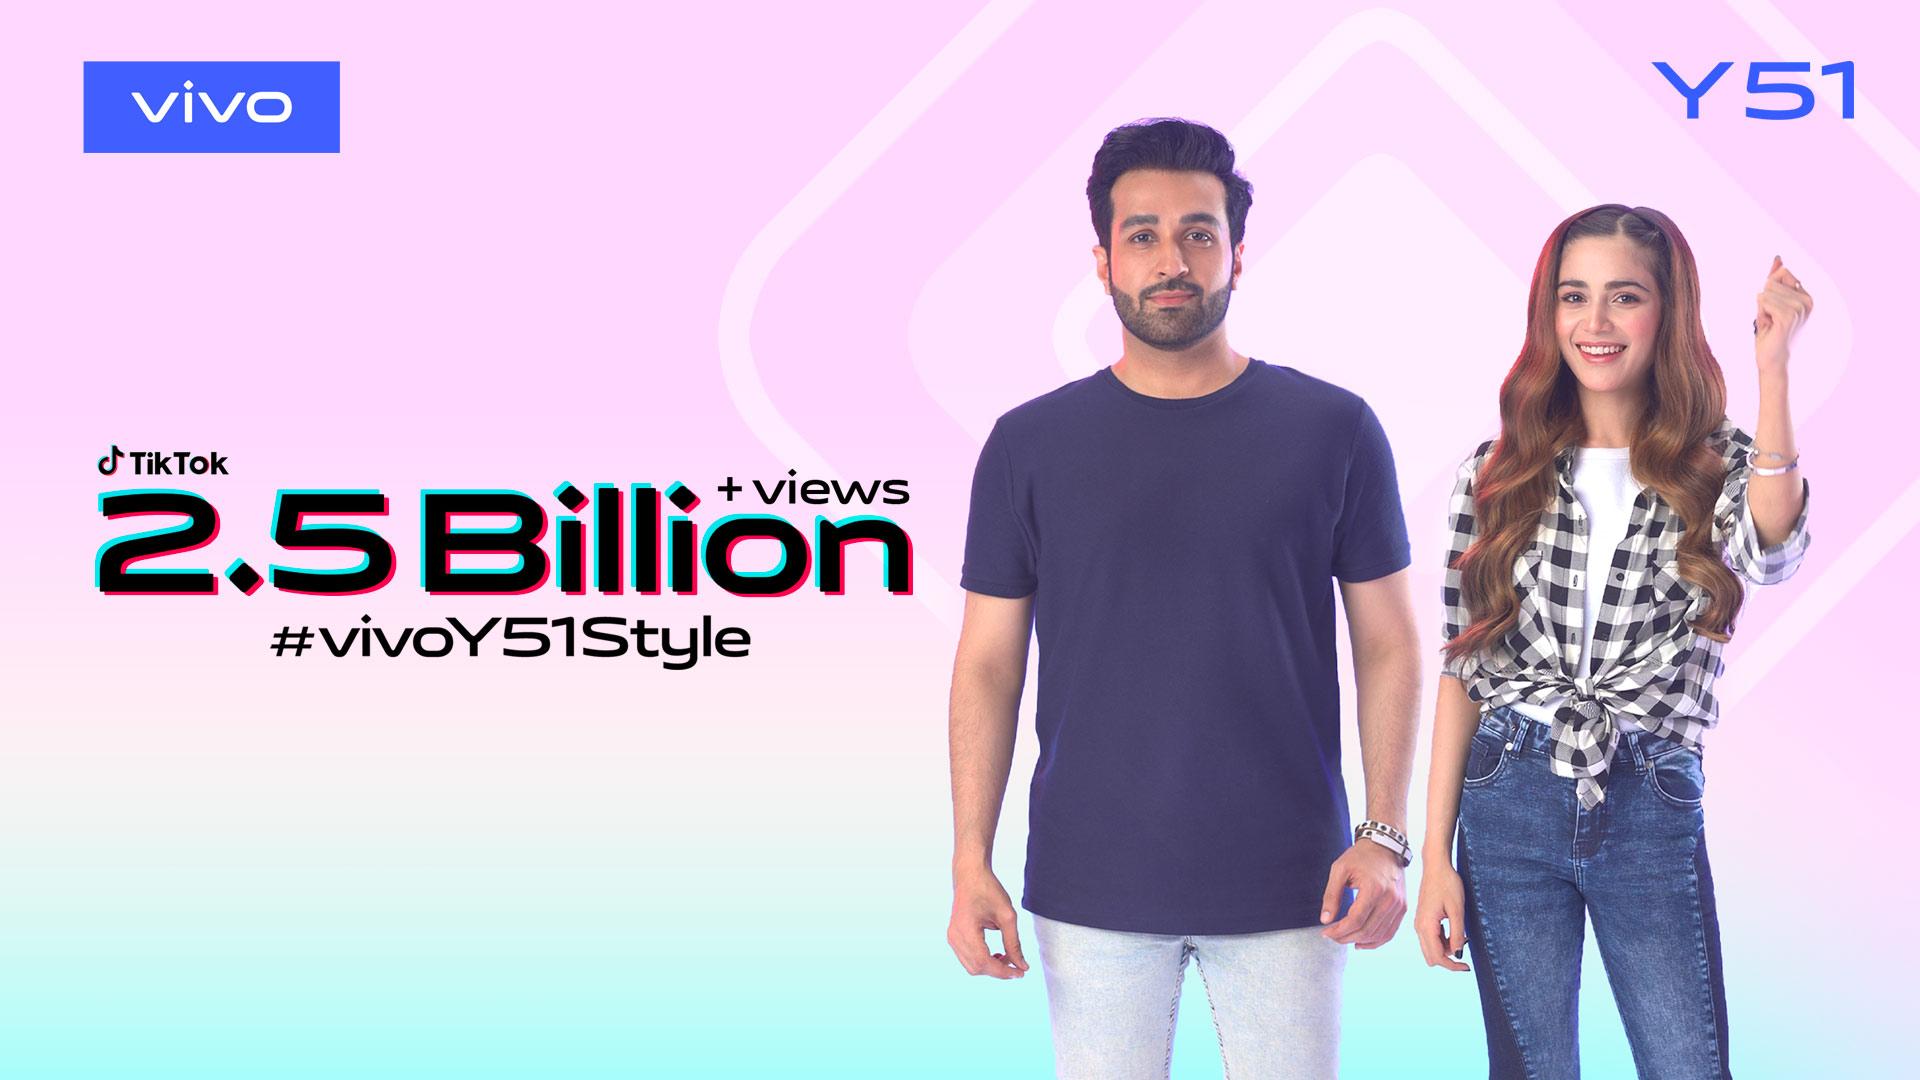 vivo Pakistan Sets a New Record with 2.5 Billion views for #vivoY51Style Challenge on TikTok